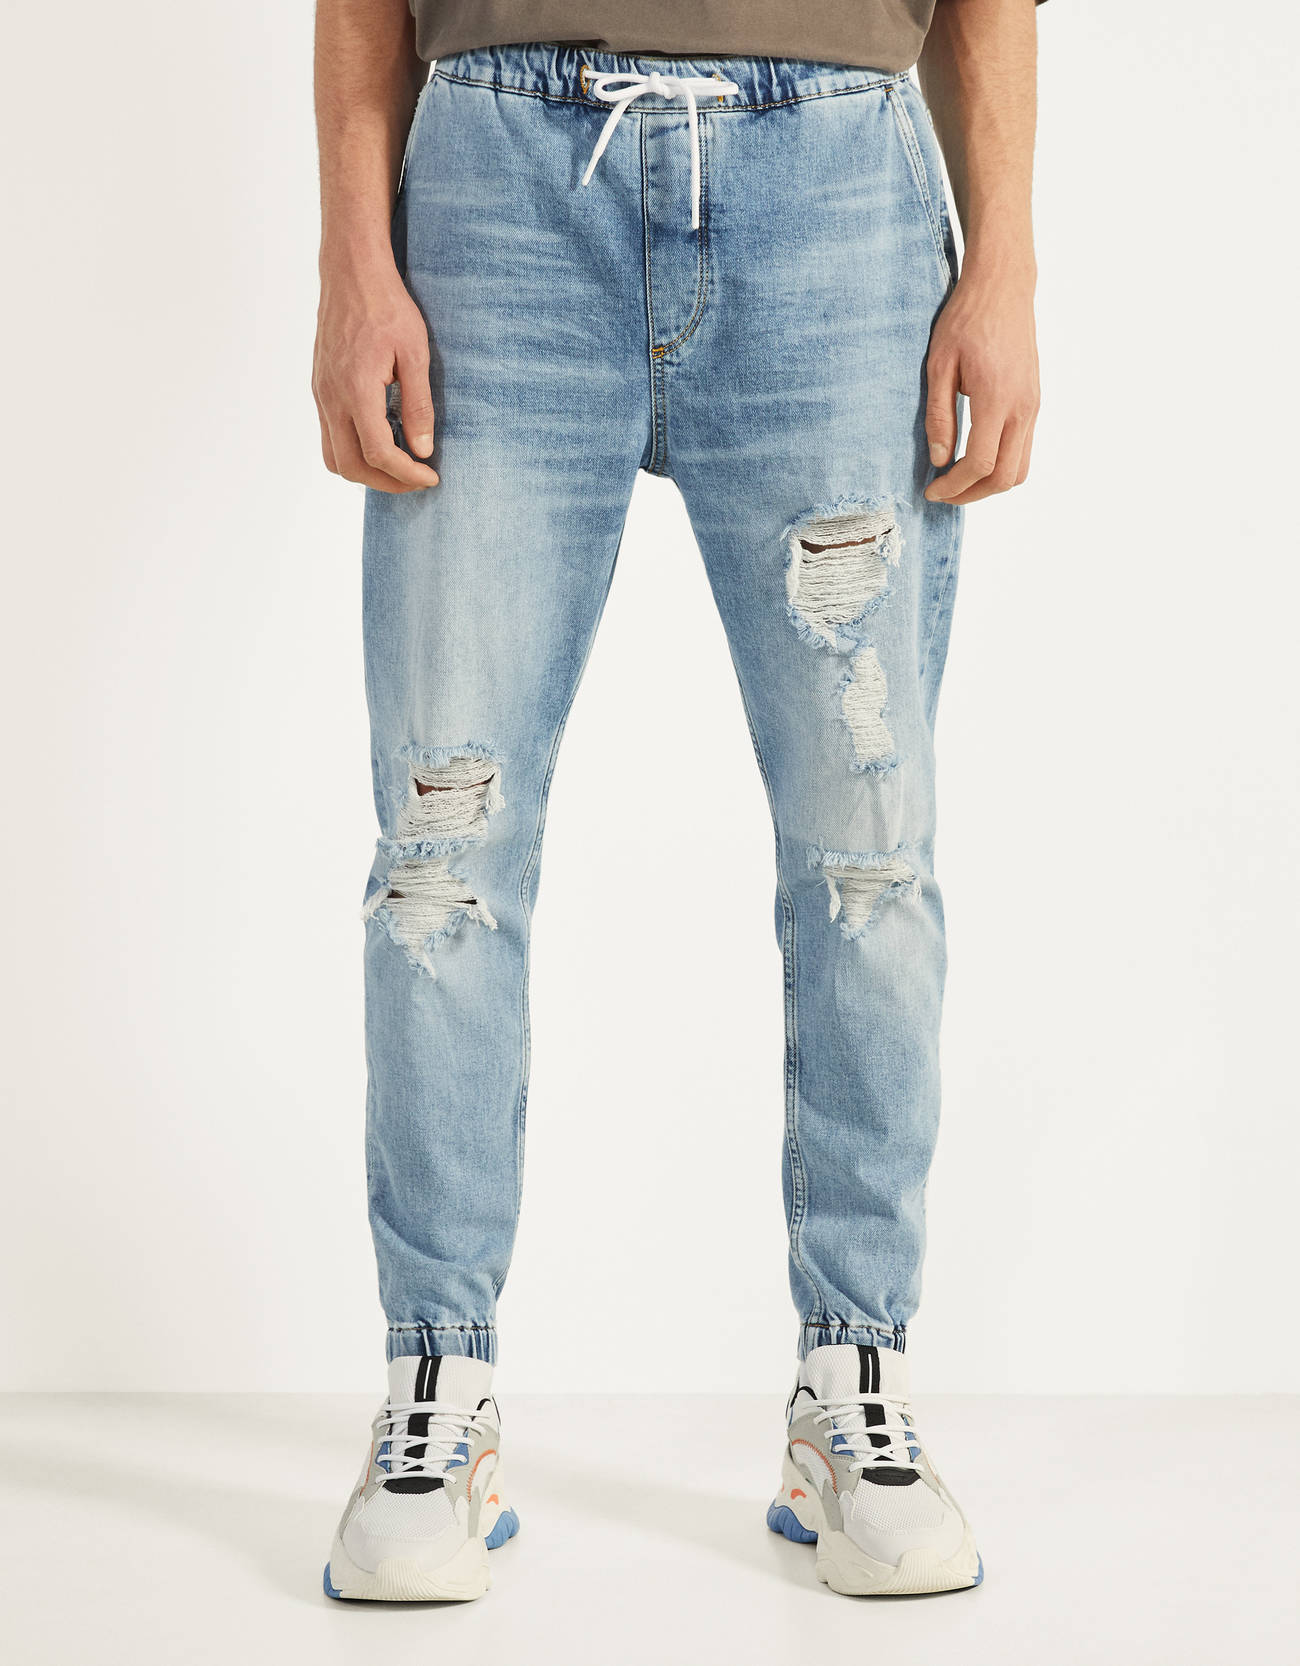 BestPriceOk - Bershka Jeans con rotos Hombre XL Azul lavado